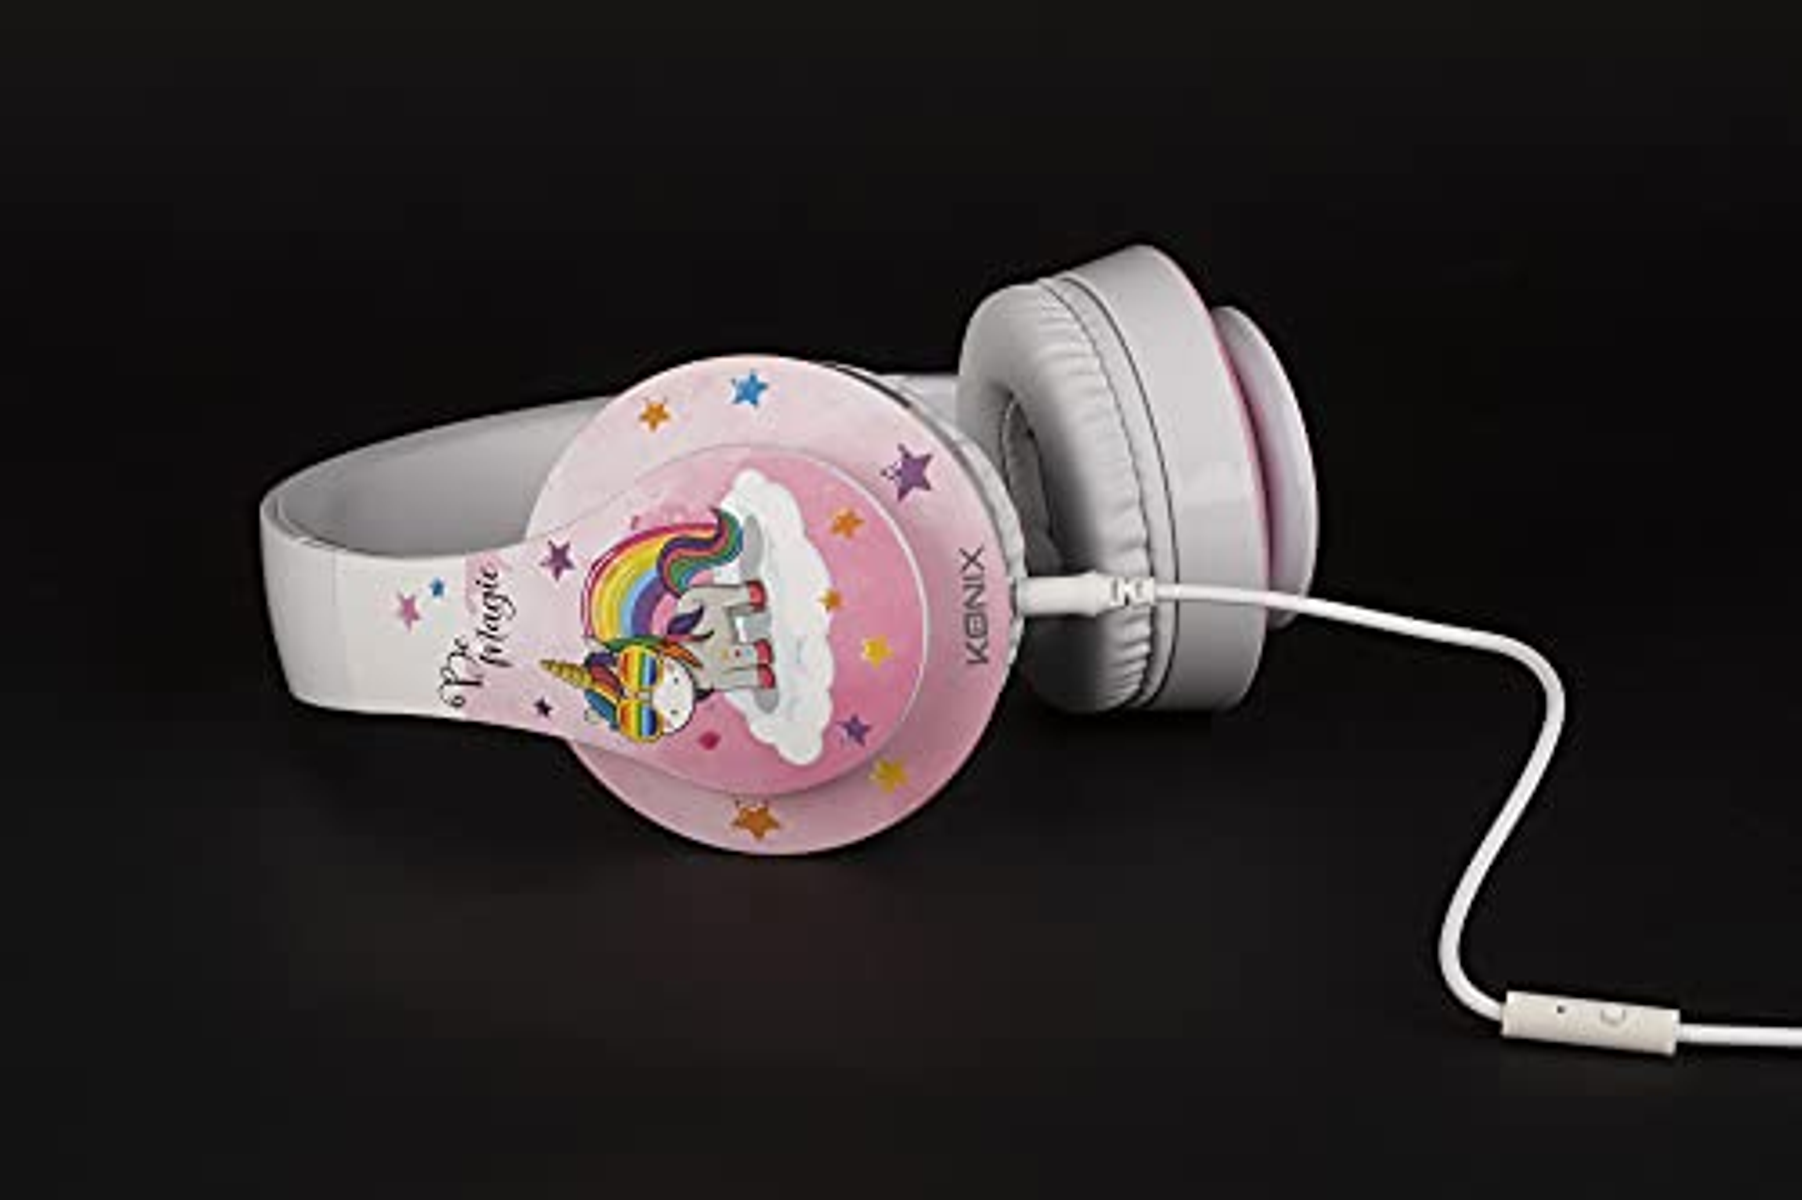 KONIX 28090 BE Mehrfarbig Gaming On-ear HEADSET Headset SW, MAGIC UNIK